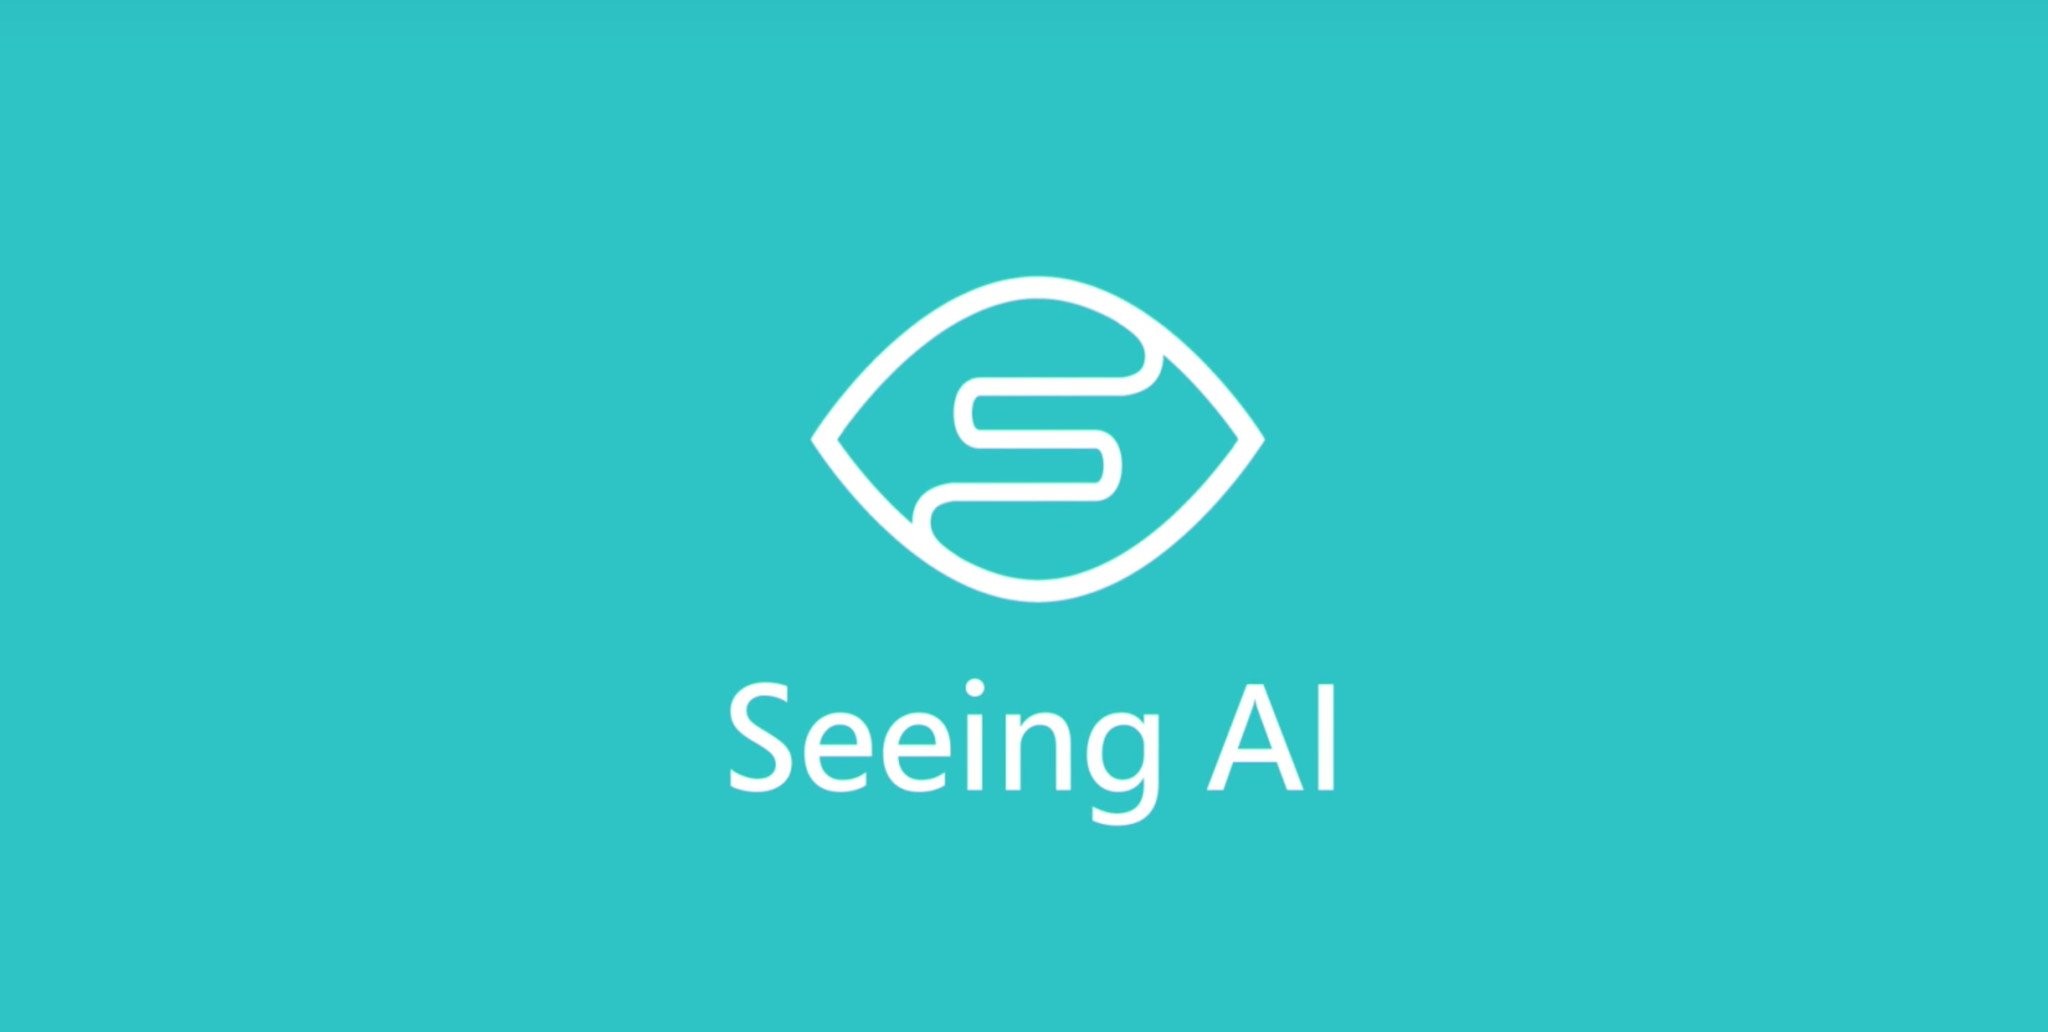 تطبيق Microsoft Seeing AI متاح الآن على Android